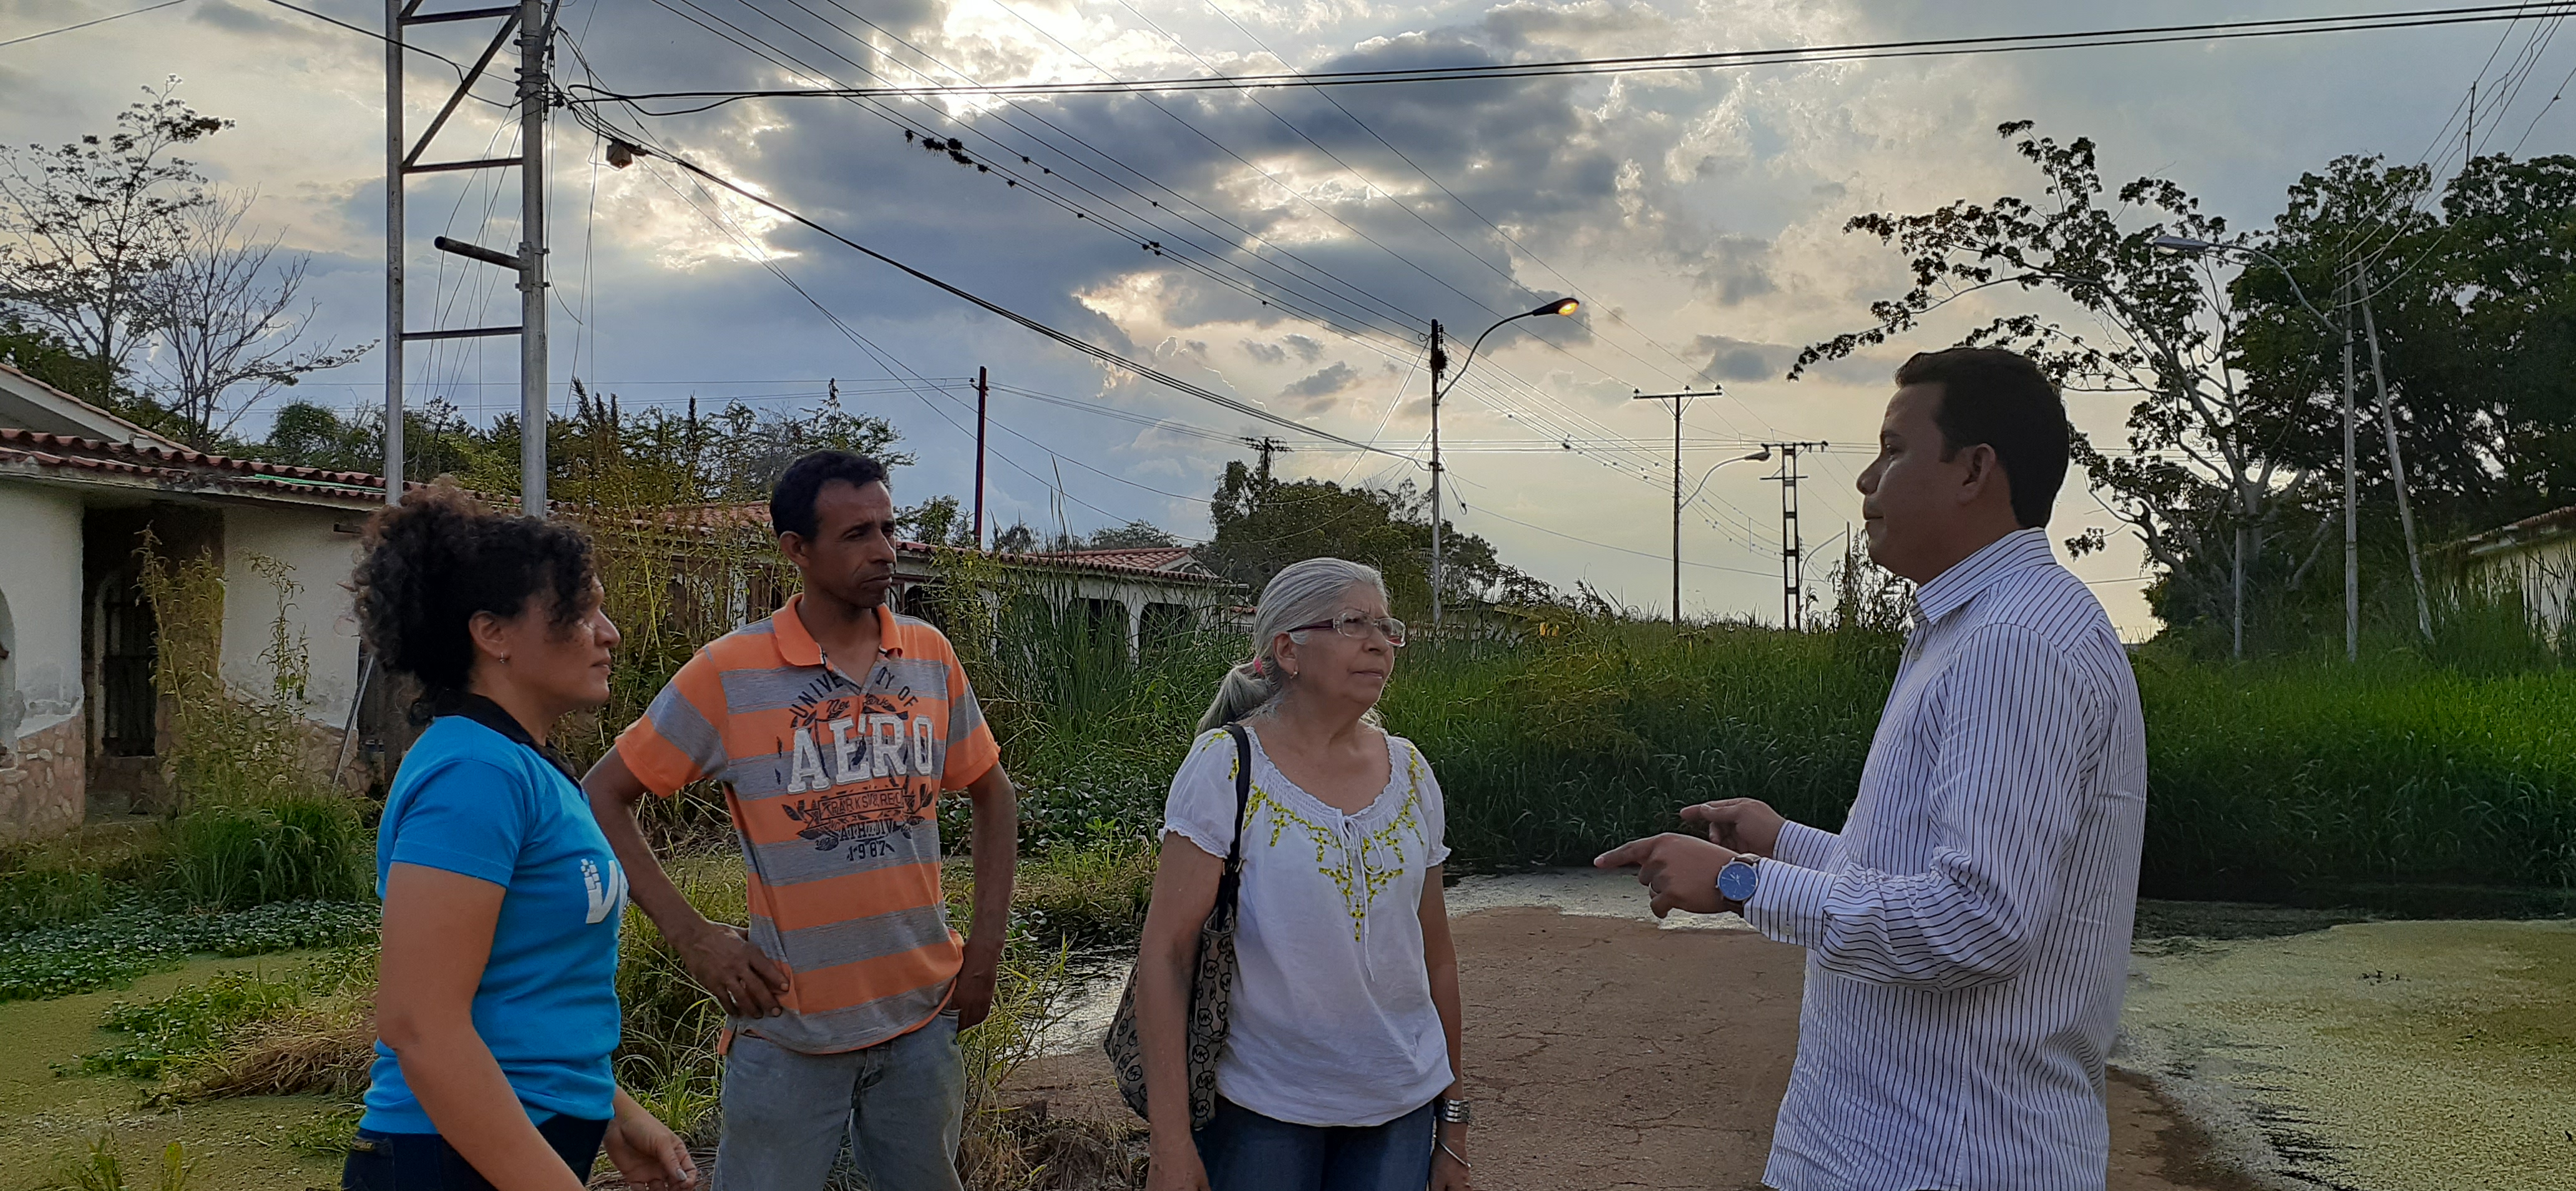 Joel Trejo: El régimen usurpador ha sumergido en la miseria a los habitantes de Mata Redonda